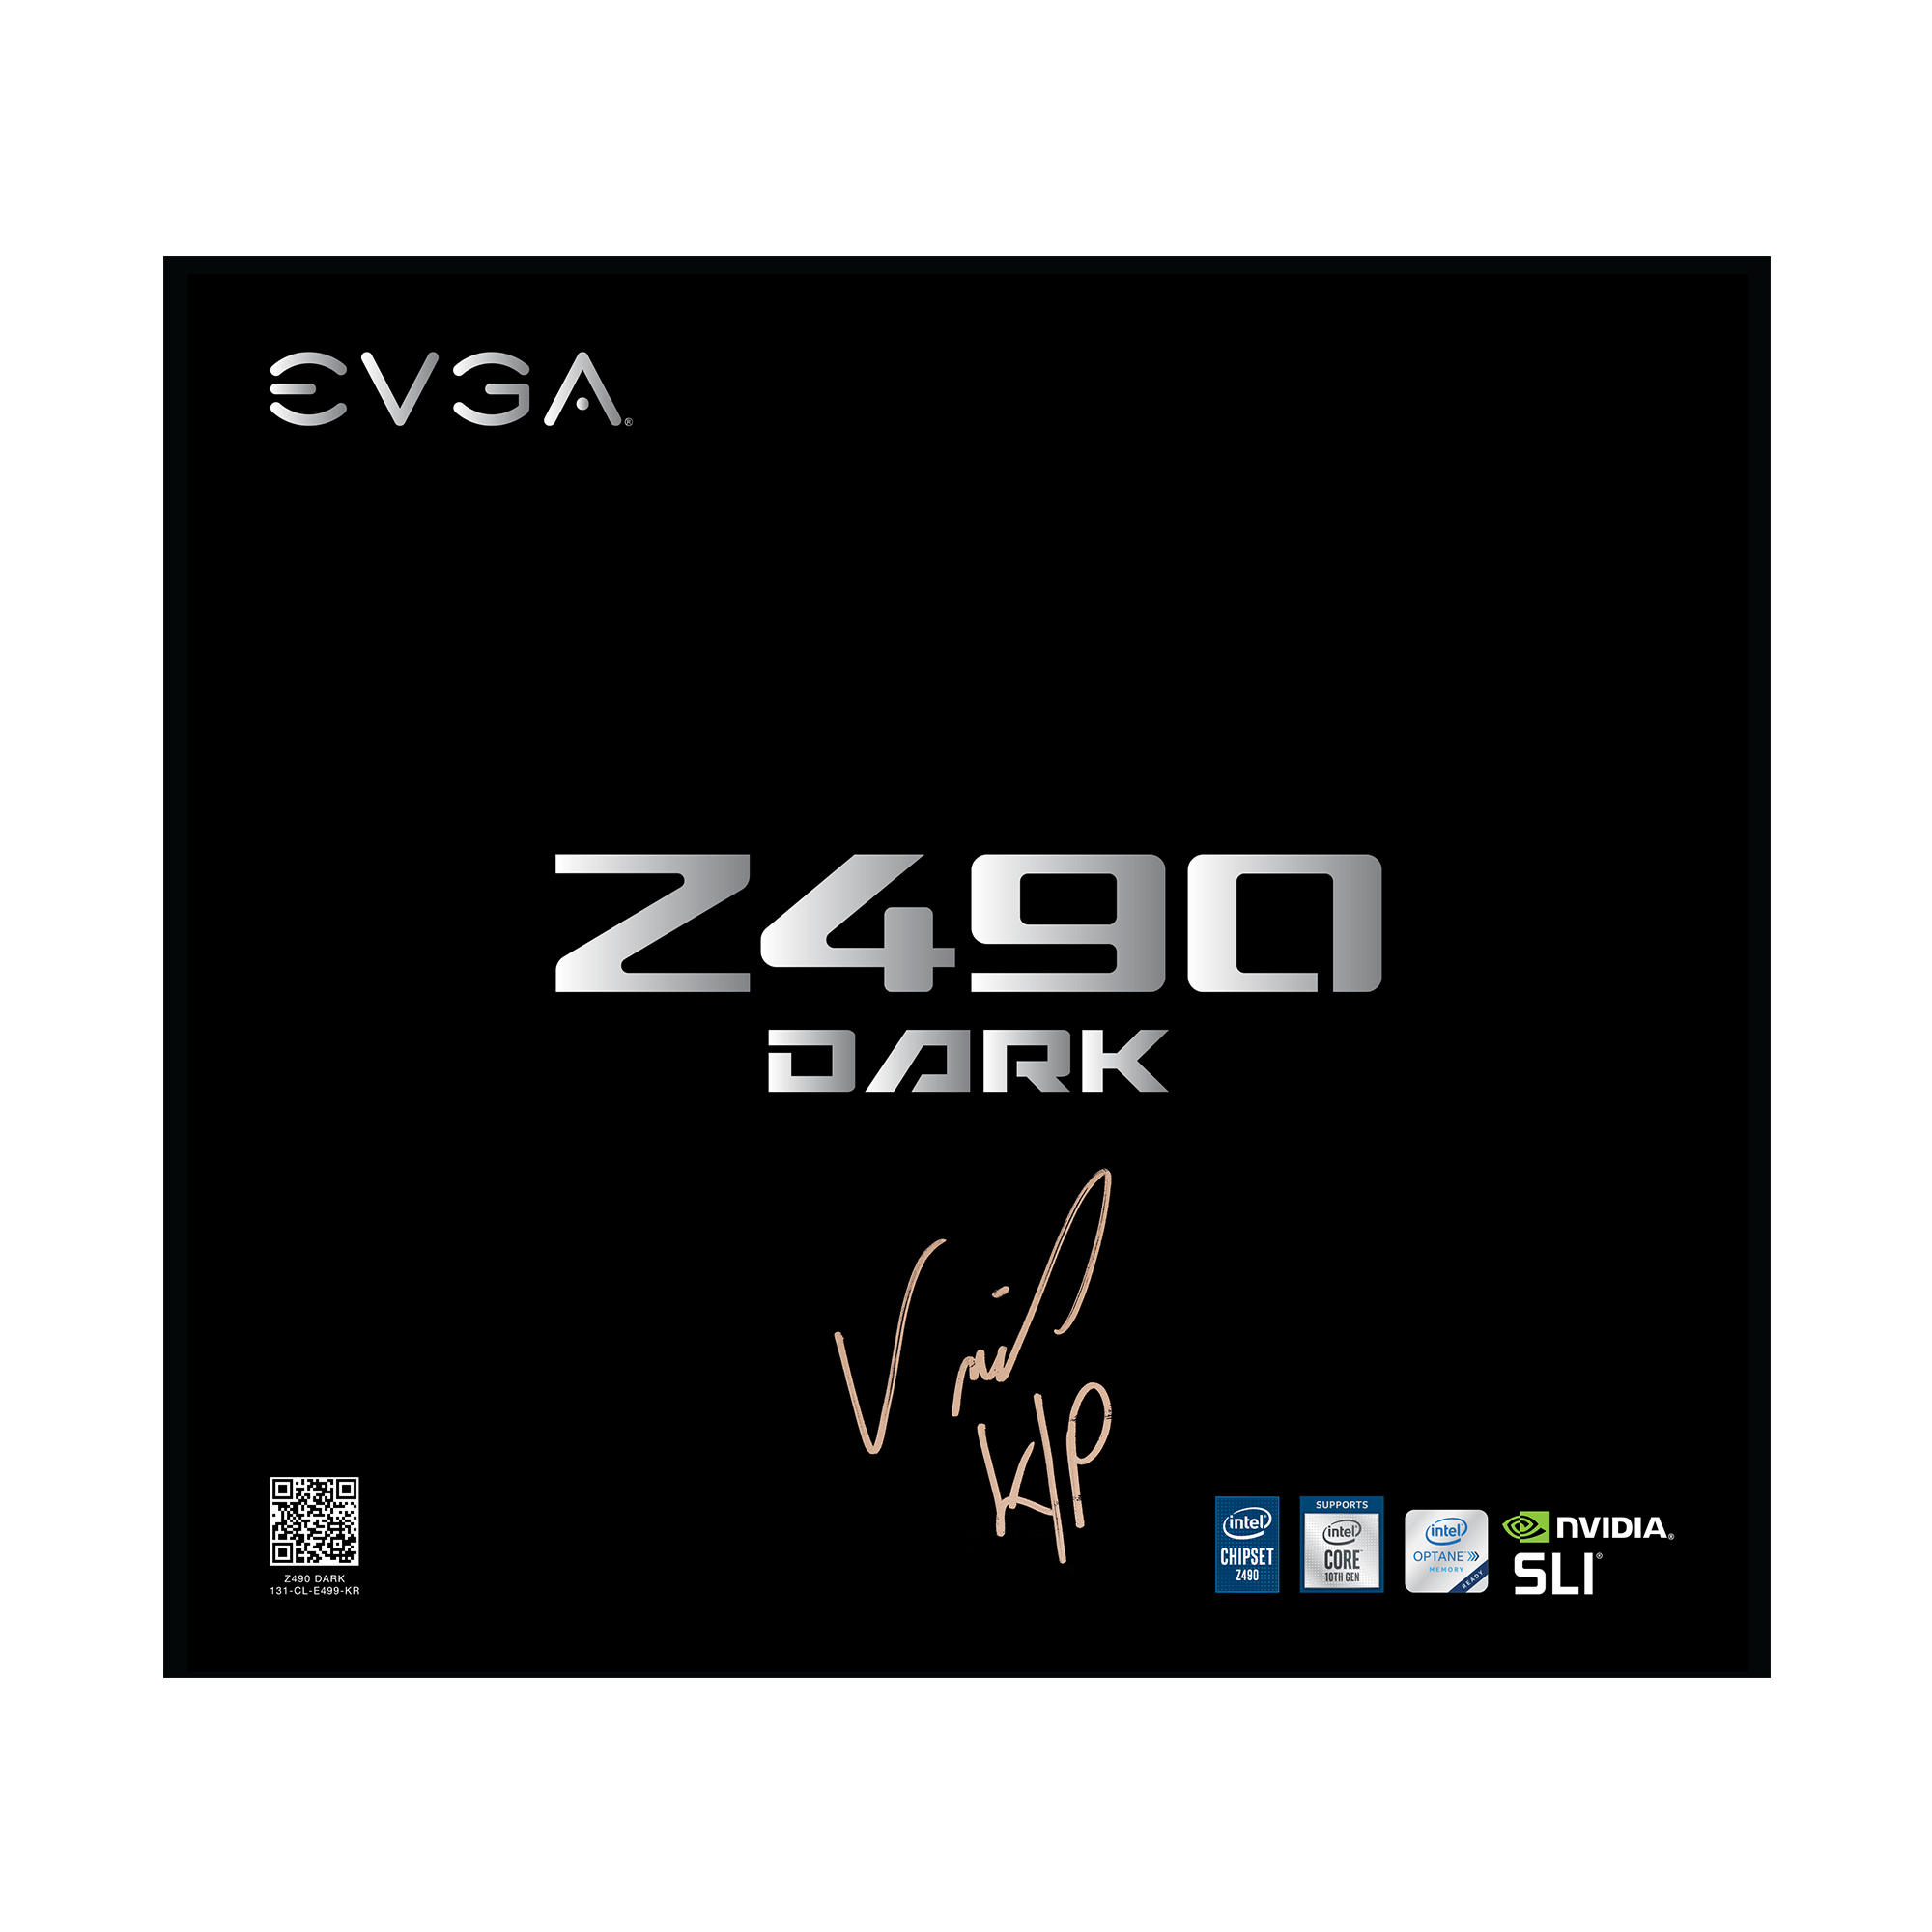 EVGA - Asia - Products - EVGA Z490 DARK K|NGP|N Edition, 131-CL 